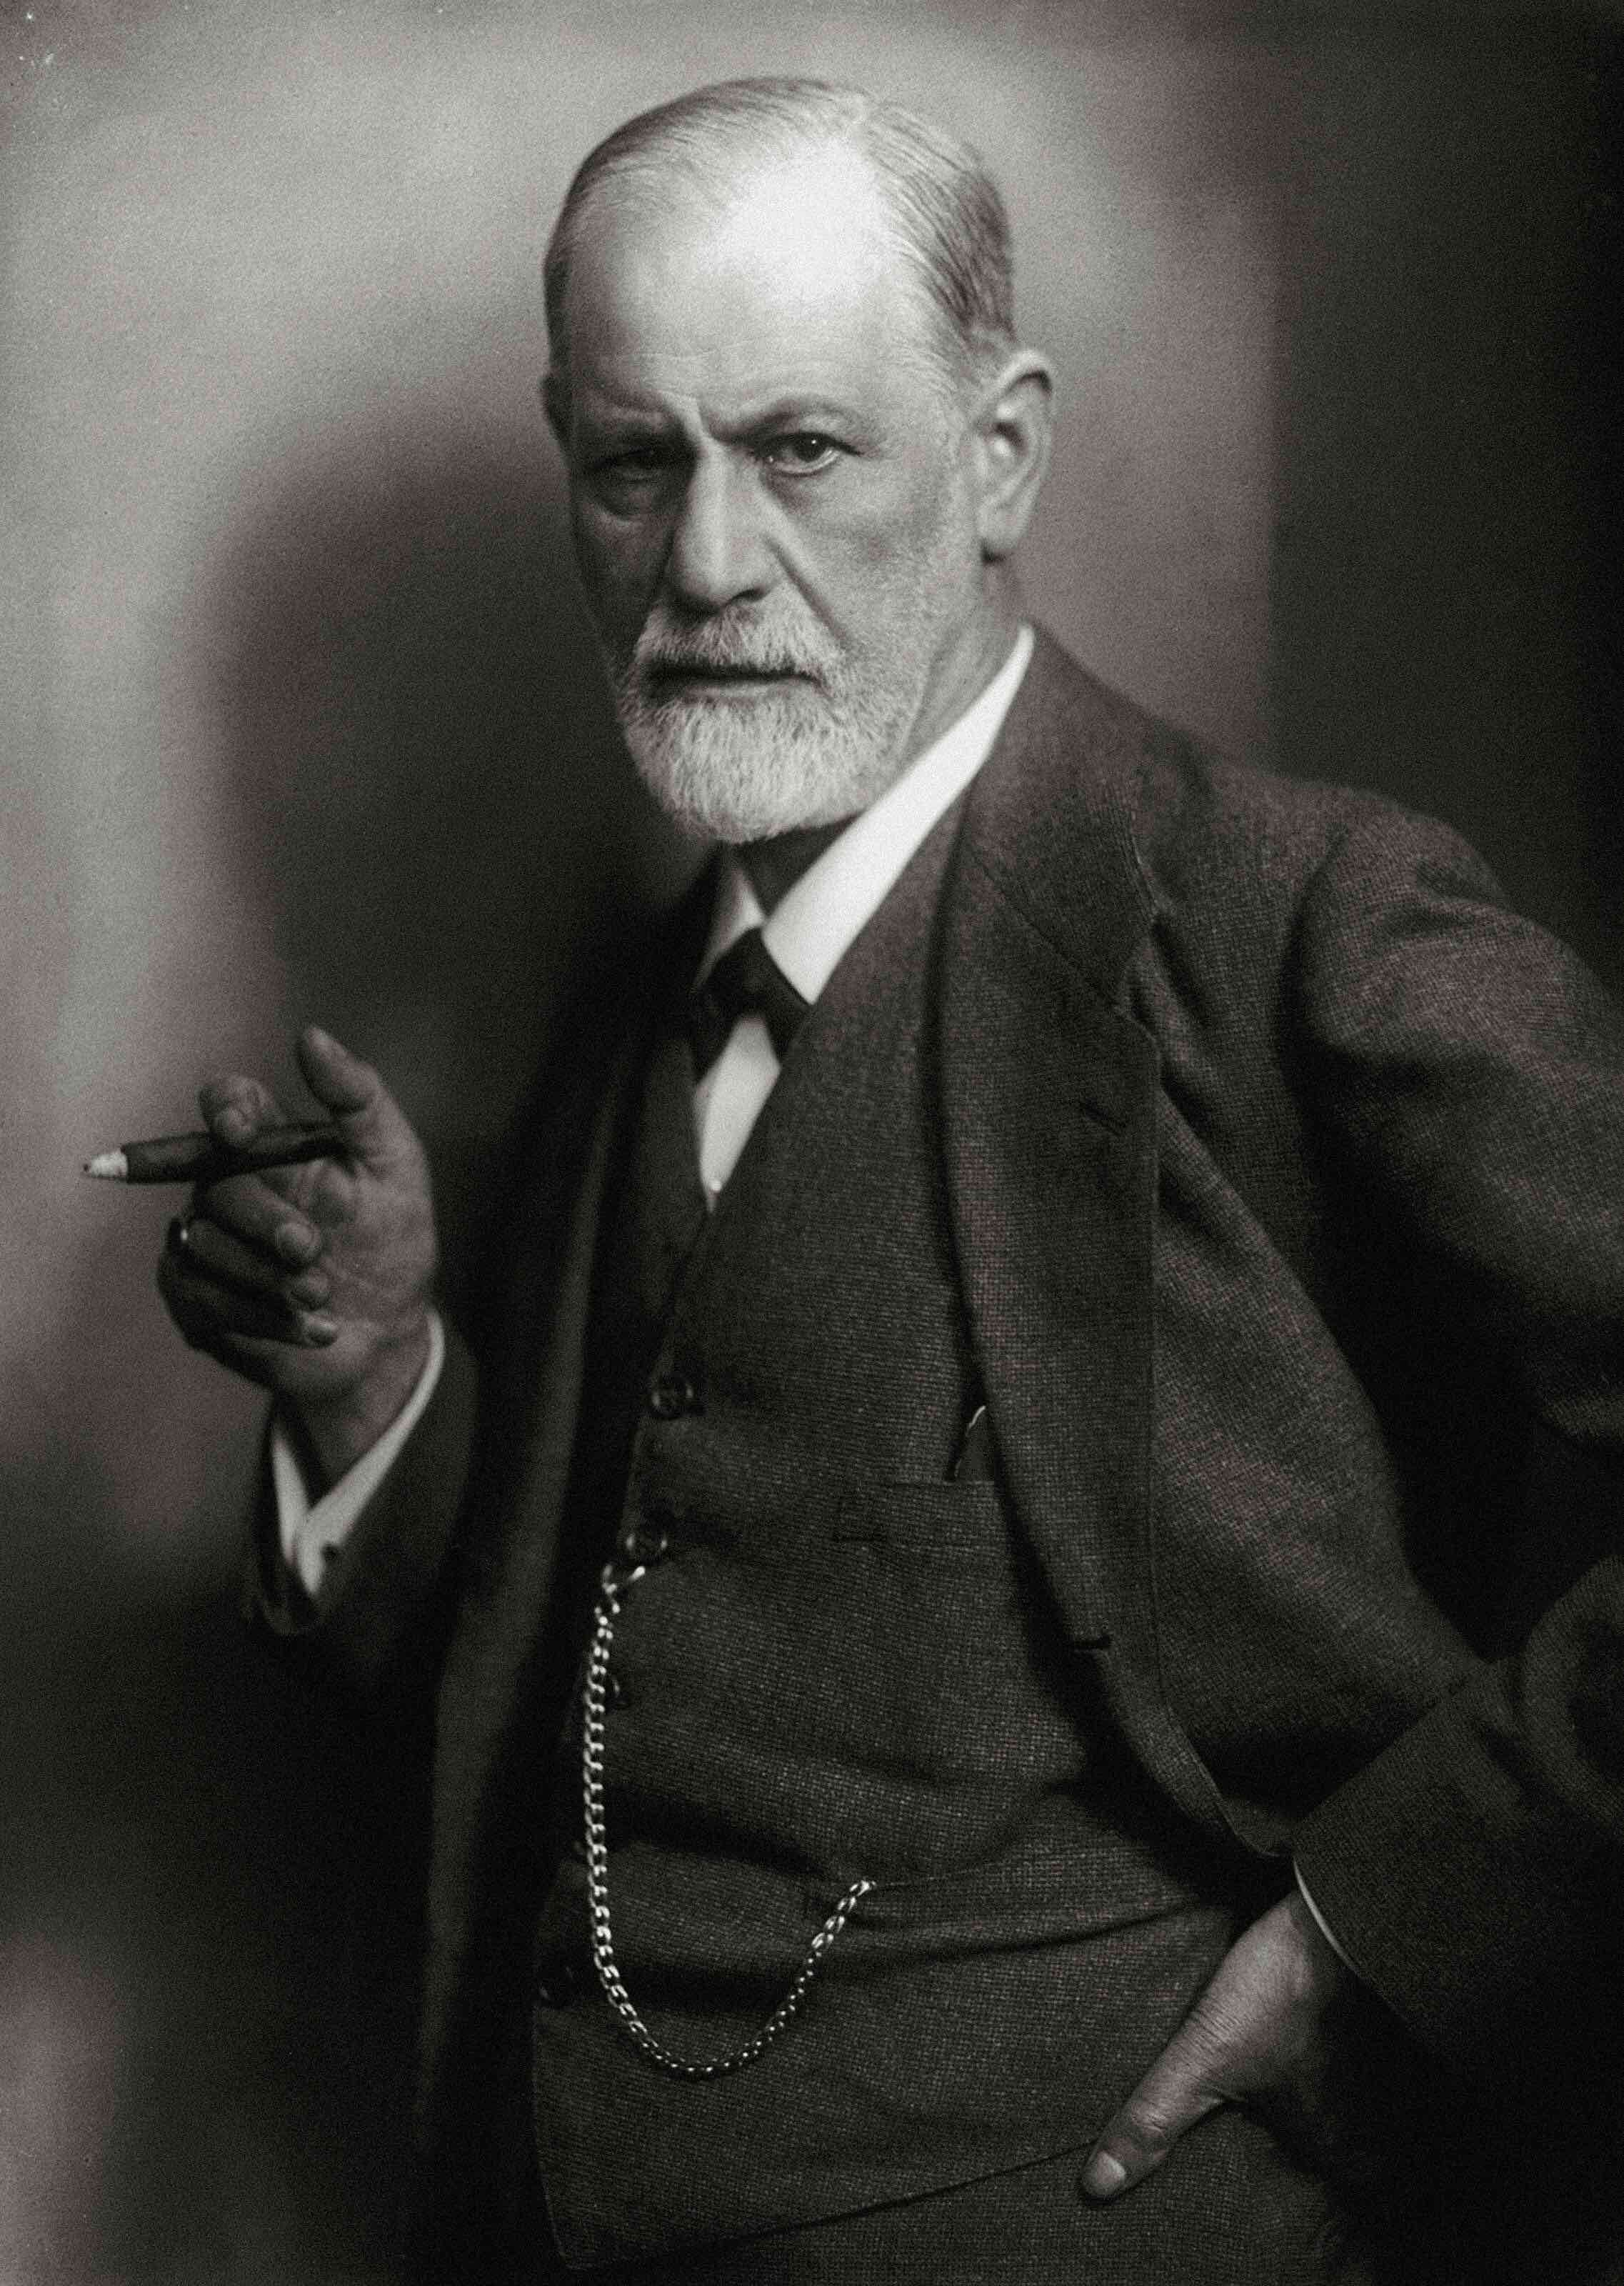 20210224-image-dpa-mb-Sigmund Freud